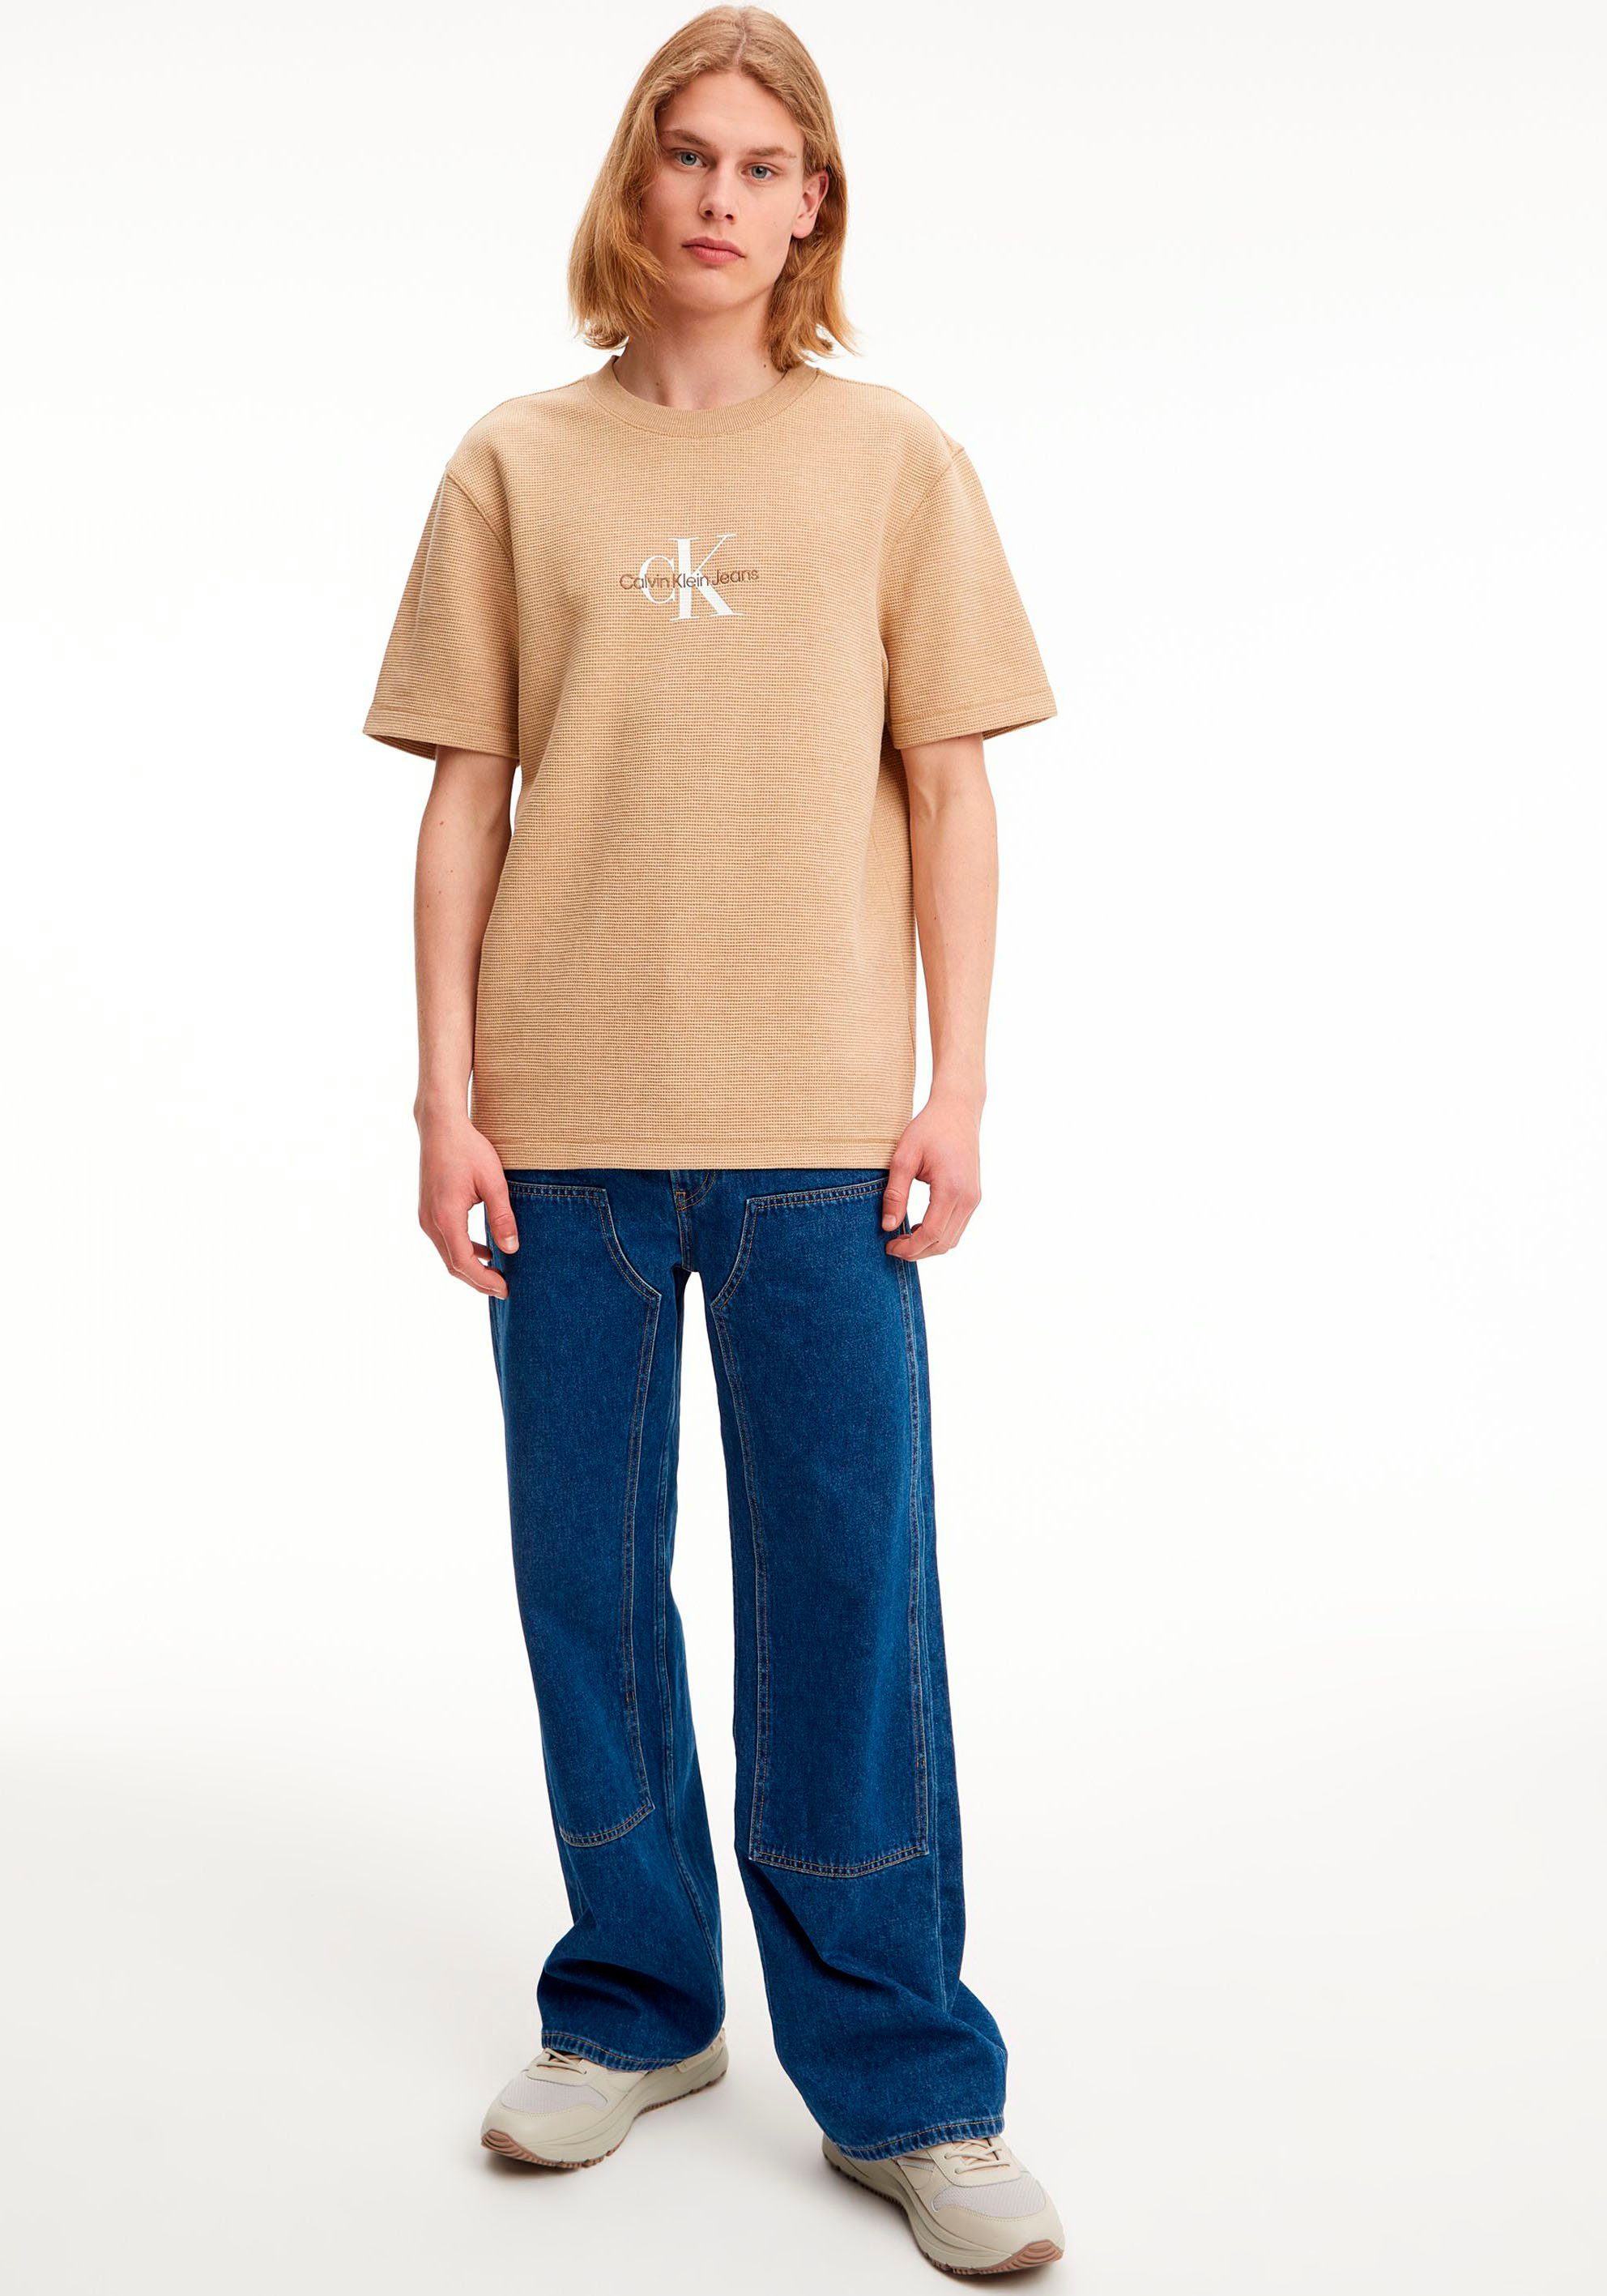 Calvin Klein Jeans T-Shirt ARCHIVAL mit Heather Travertine TEE Waffelstrukturmuster WAFFLE MONOLOGO